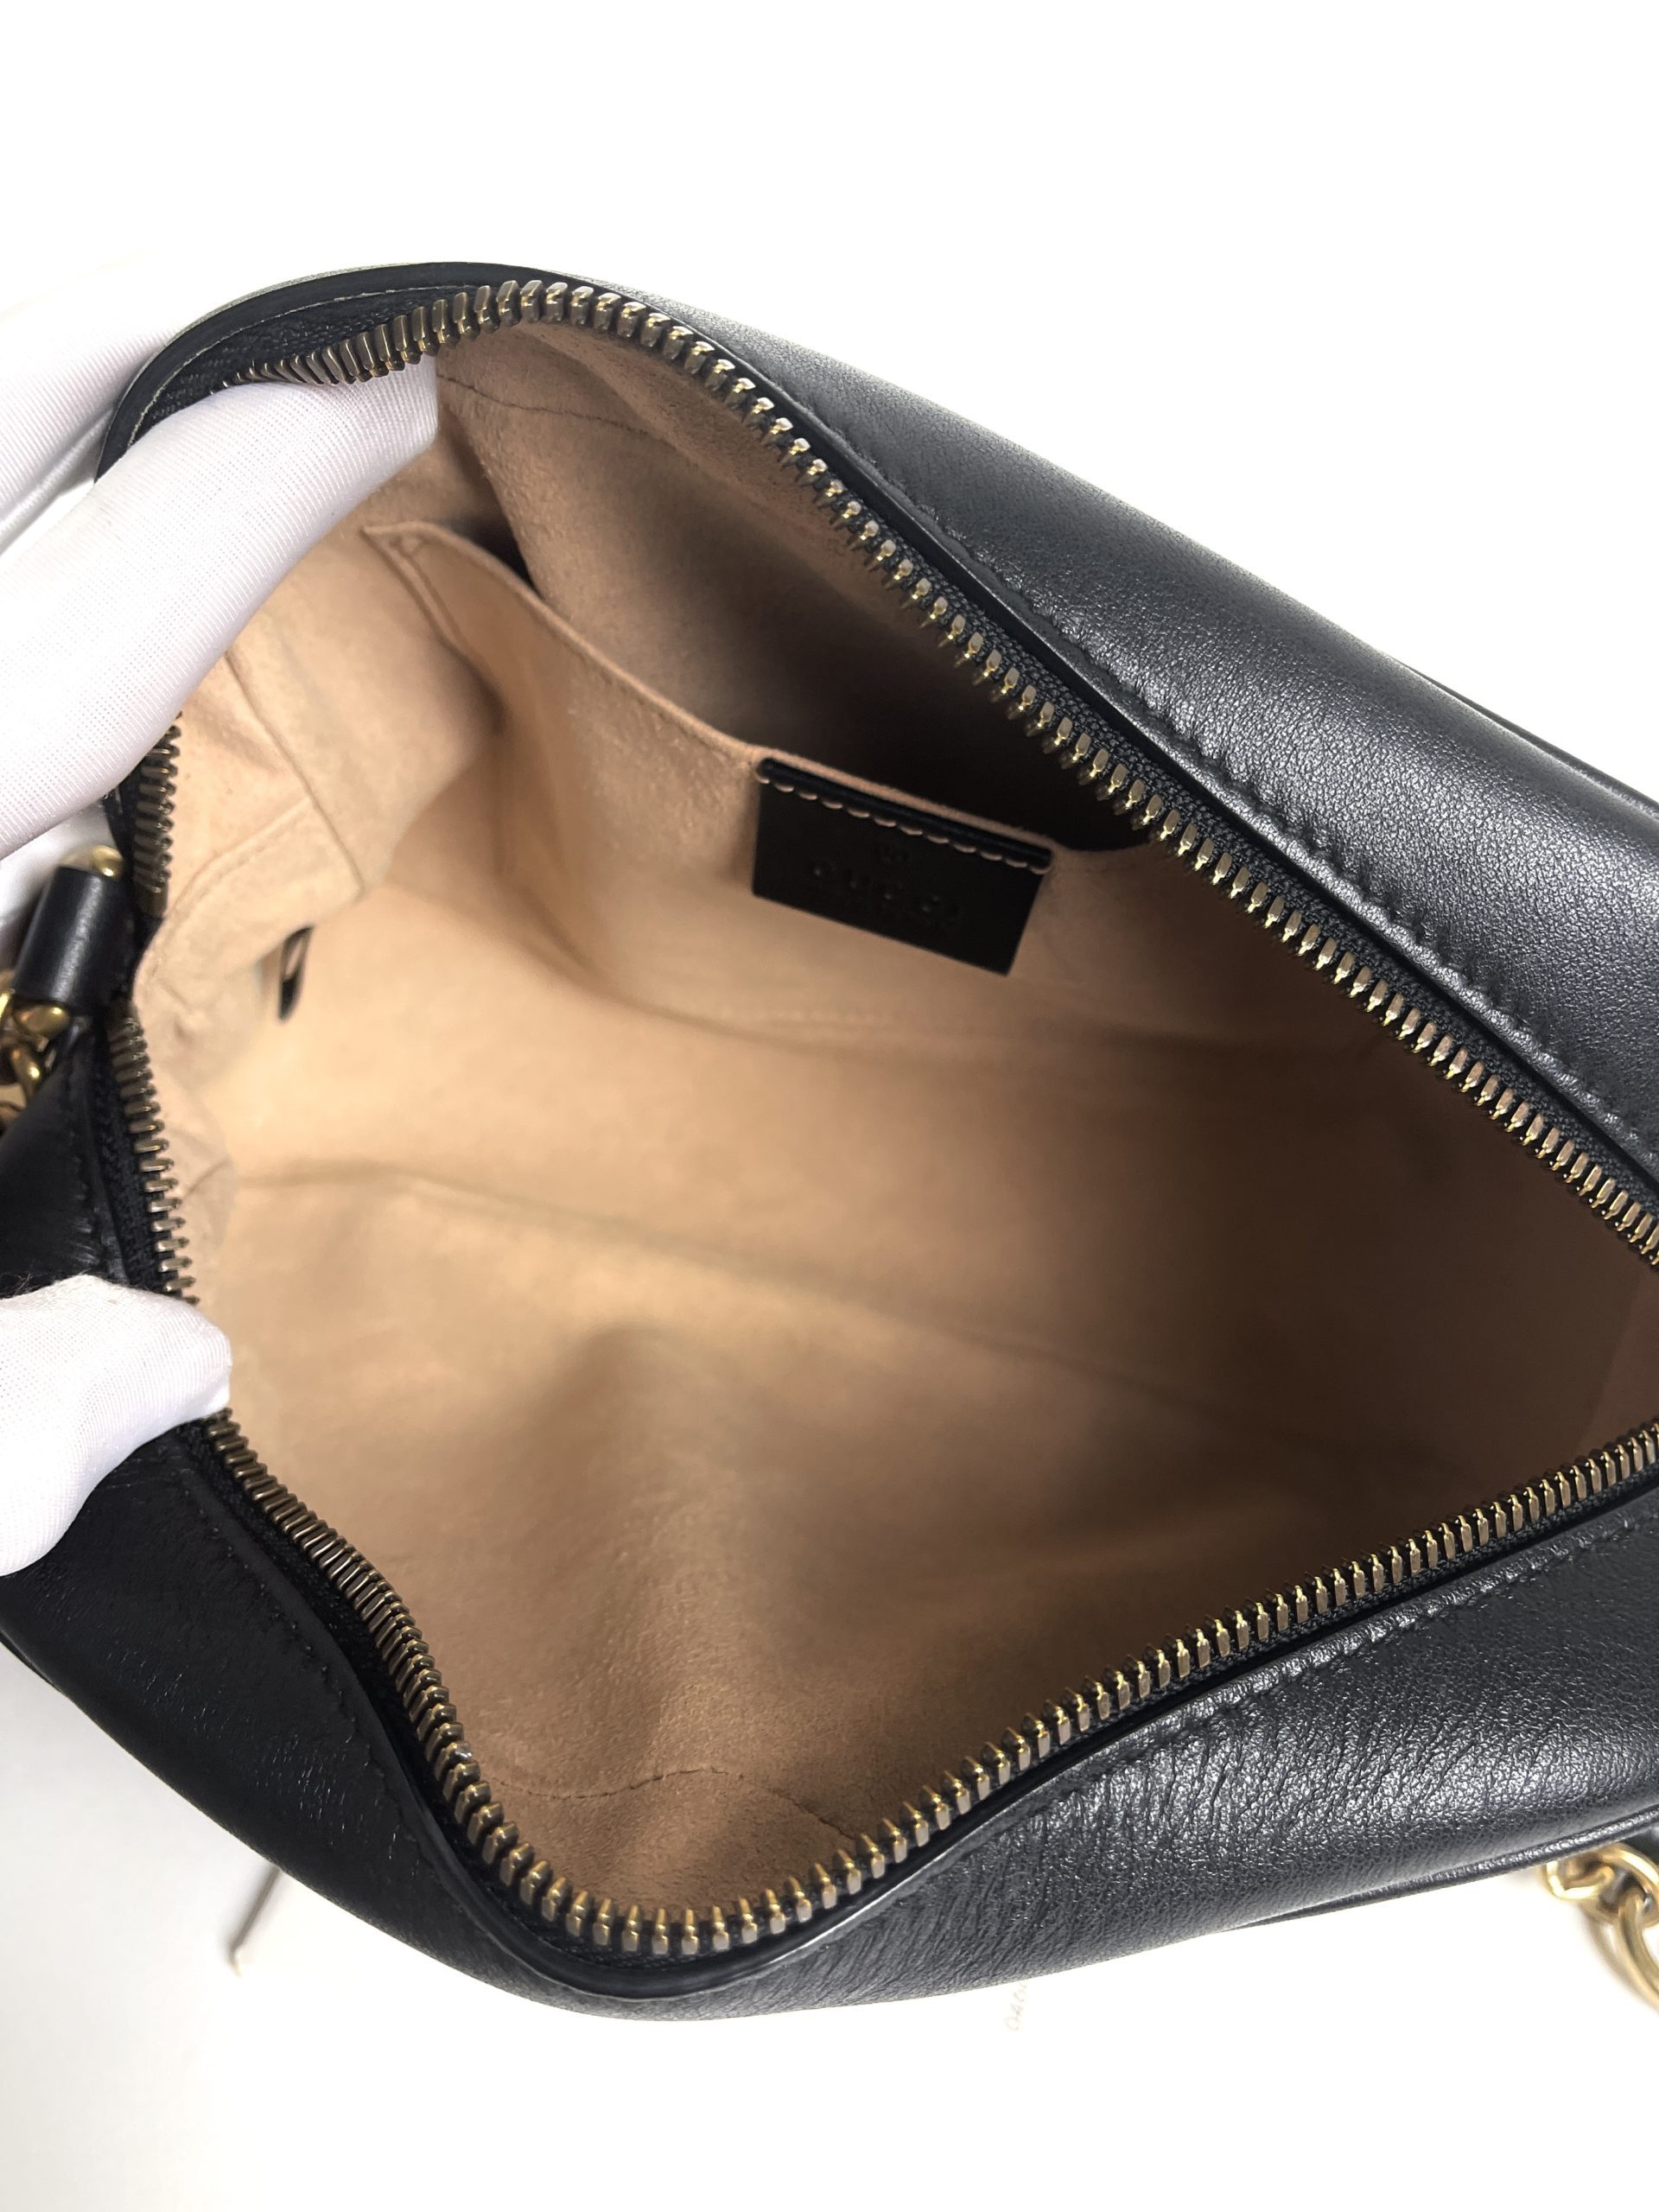 Gucci GG Marmont Double Zip Shoulder Bag